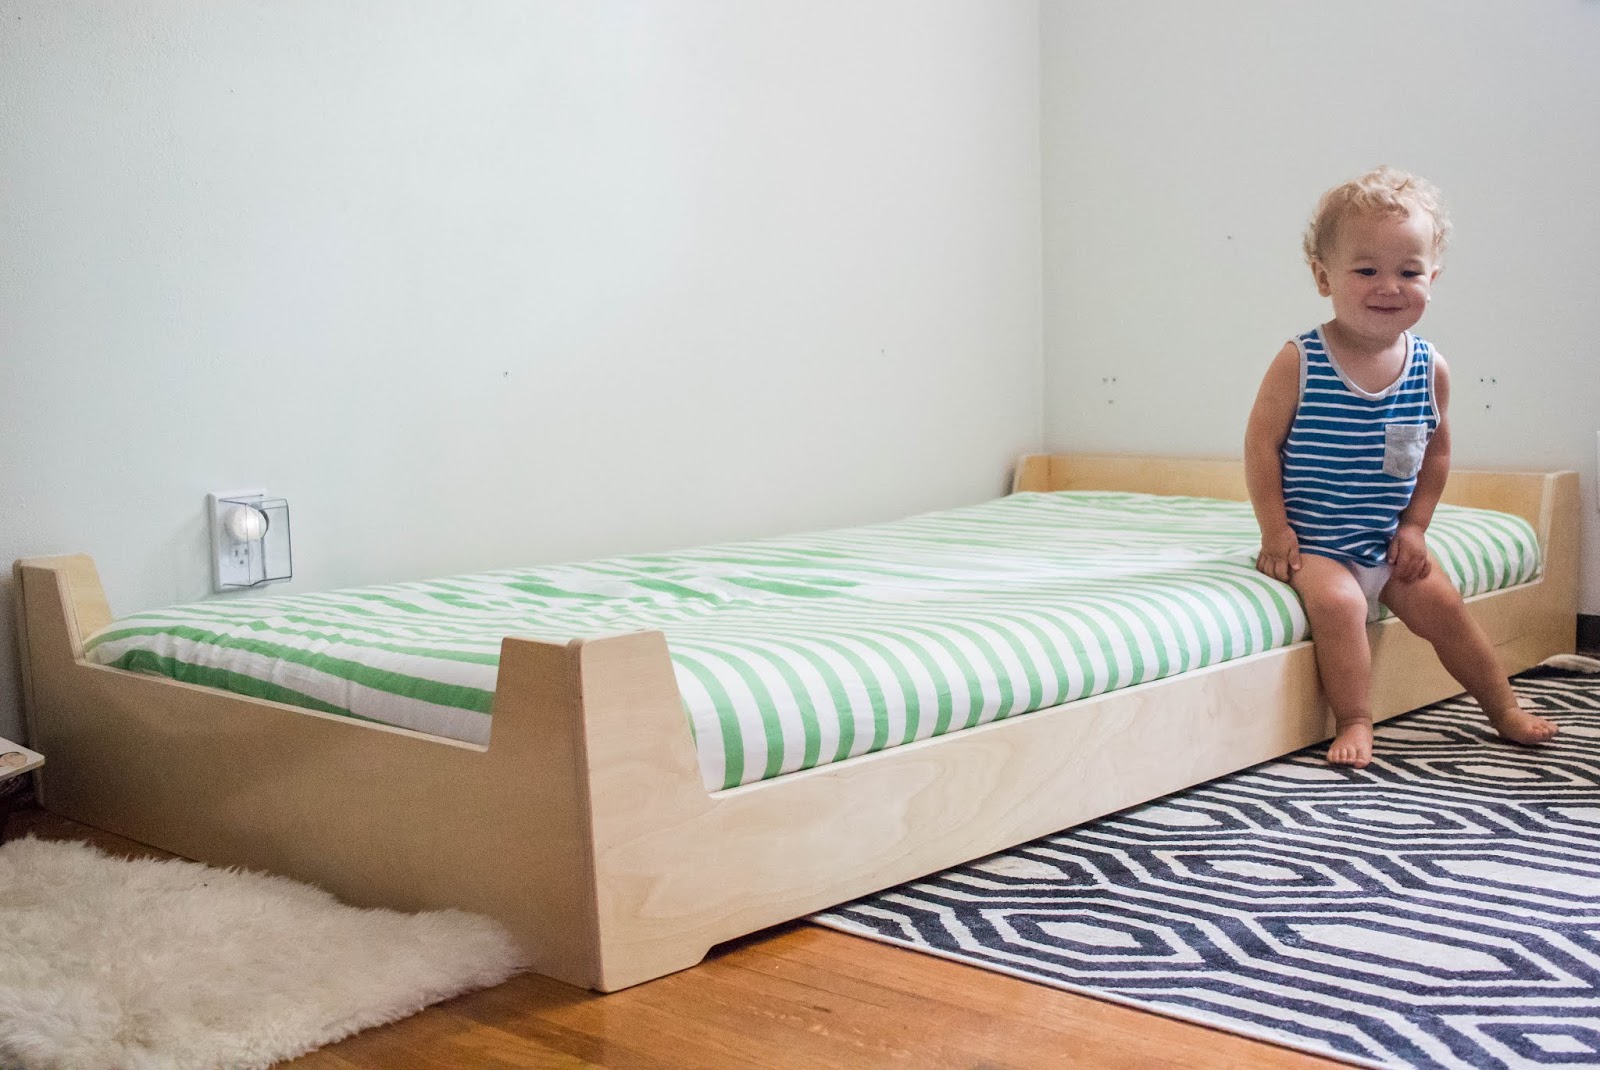 crib and mattress on floor